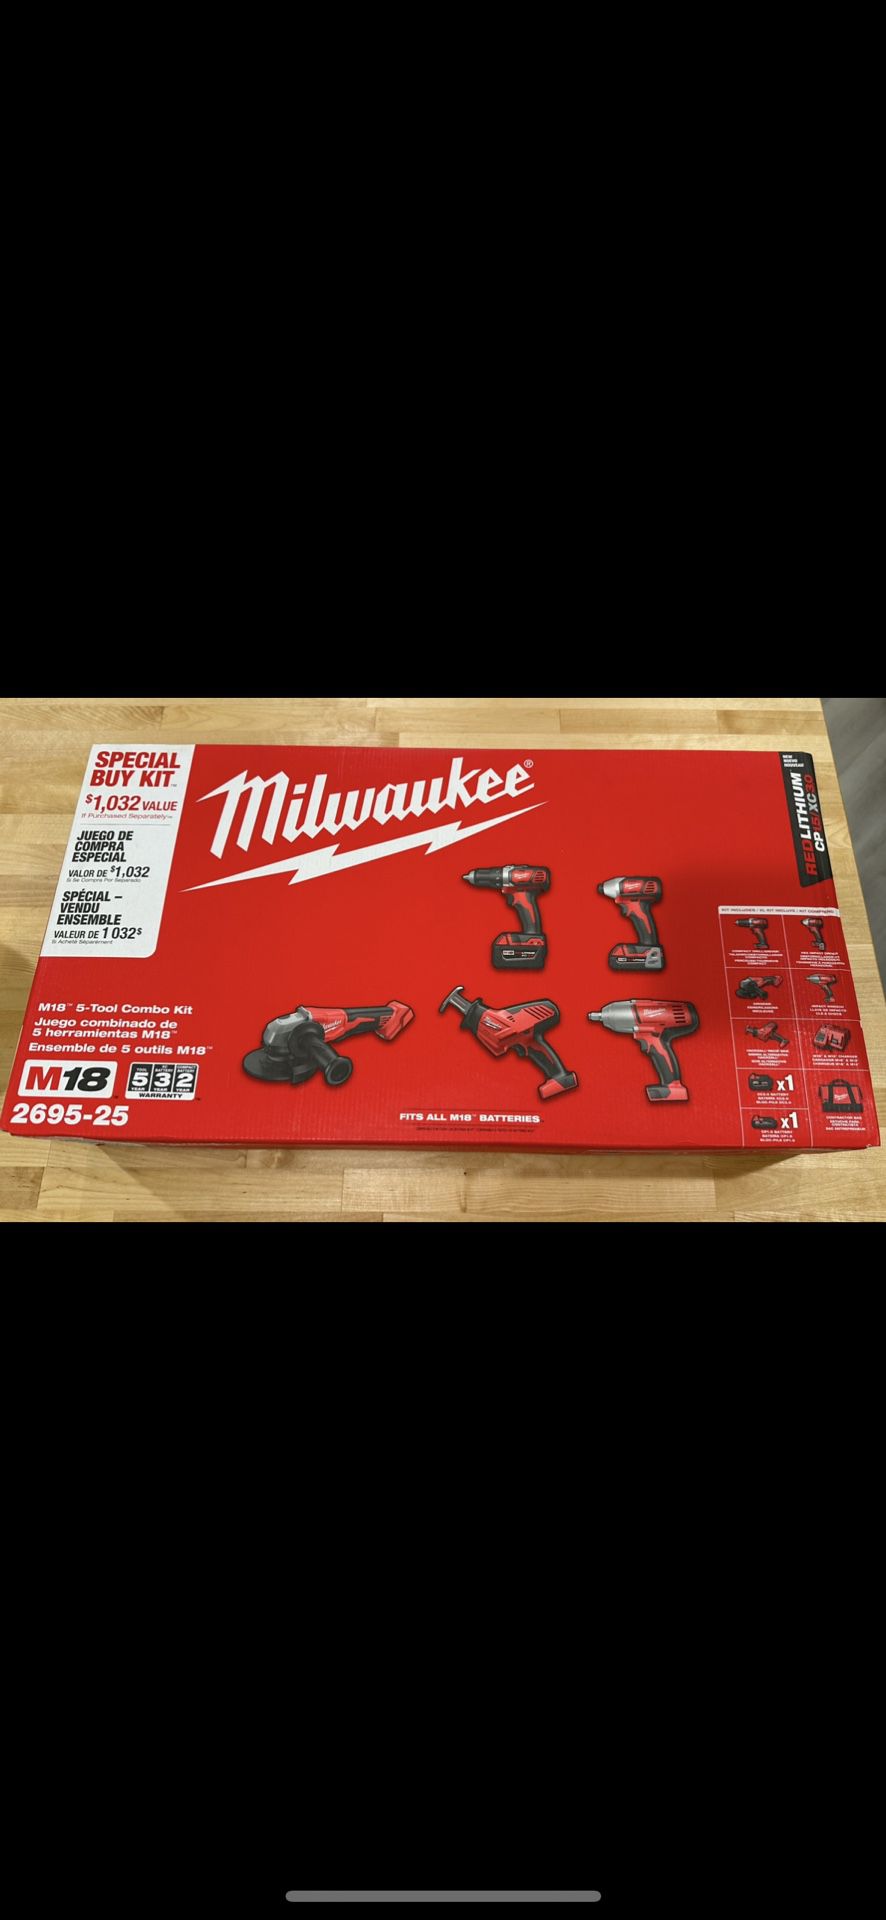 Milwaukee M18 Combo Kit (5-Tool) with 2-Batteries, Charger & Tool Bag